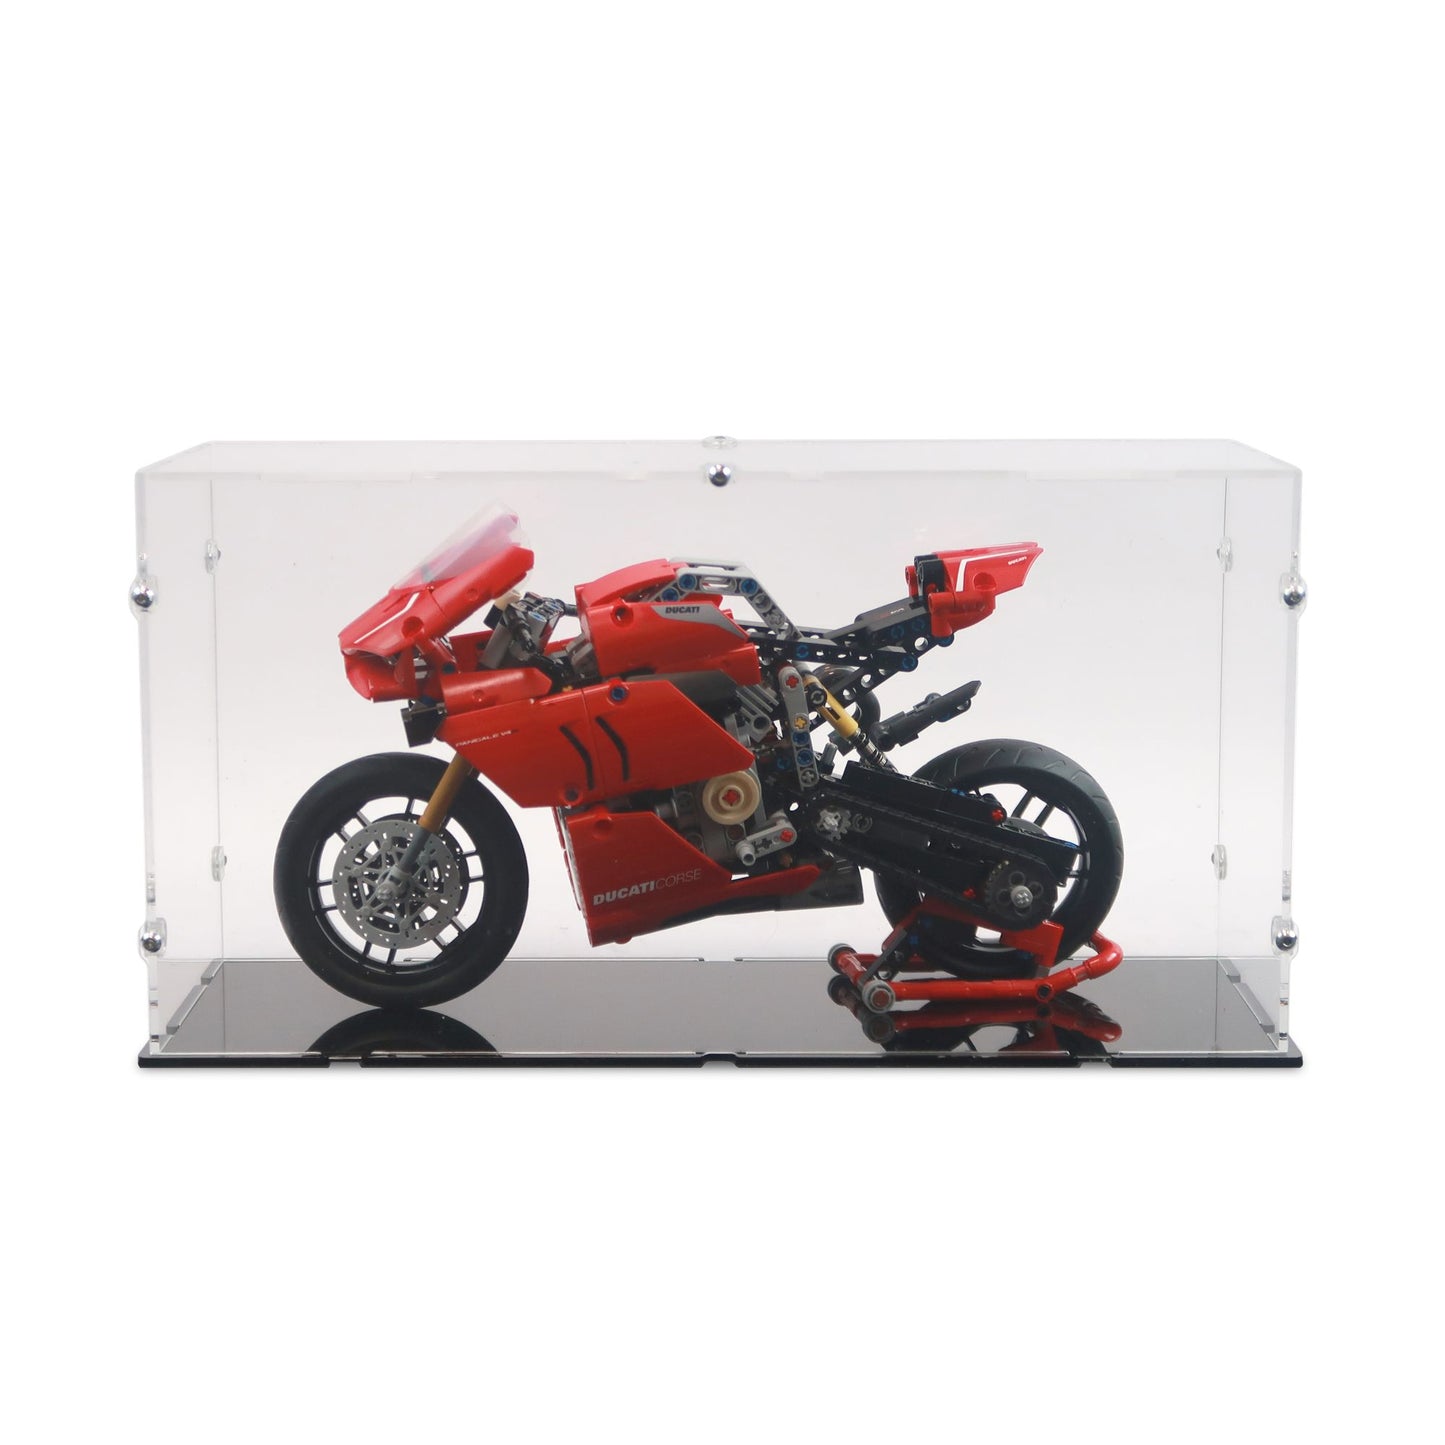 42107 Ducati Panigale V4 R Display Case